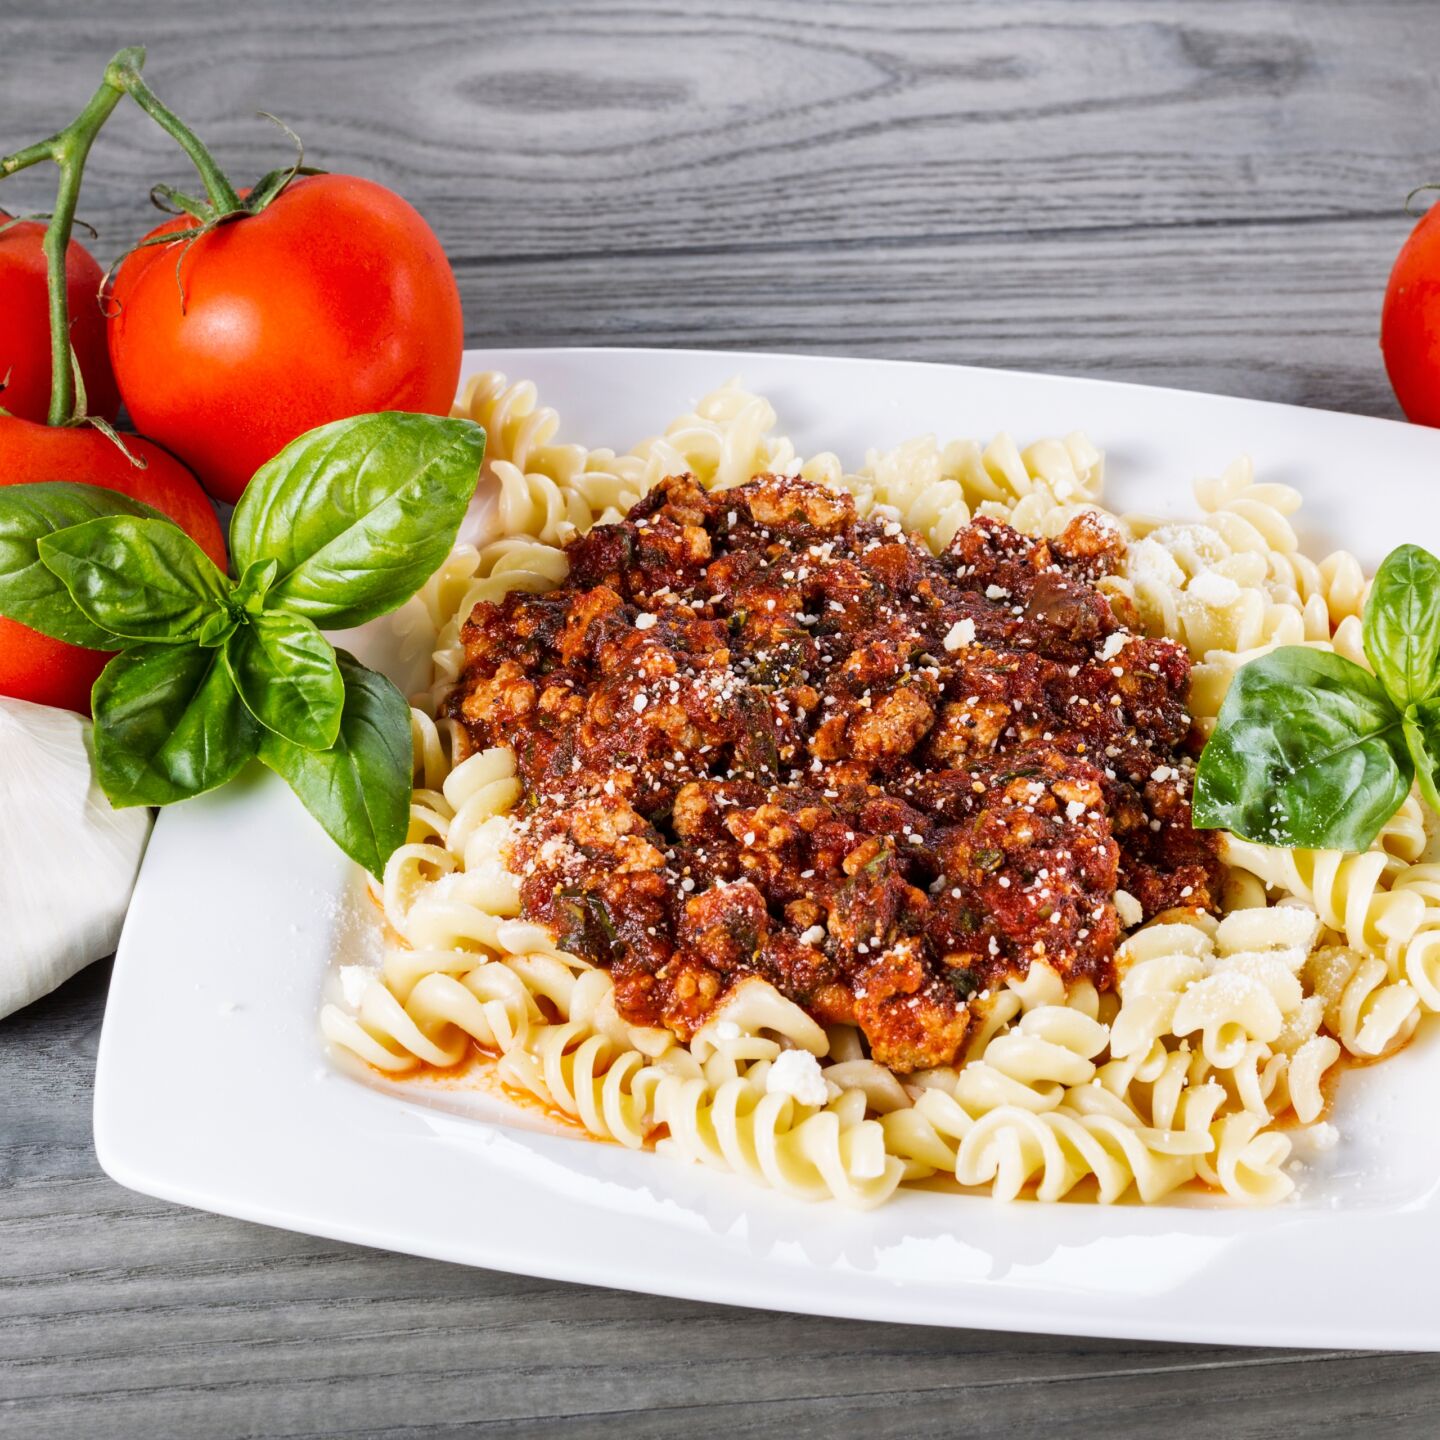 Types of pasta sauce - meat sauce